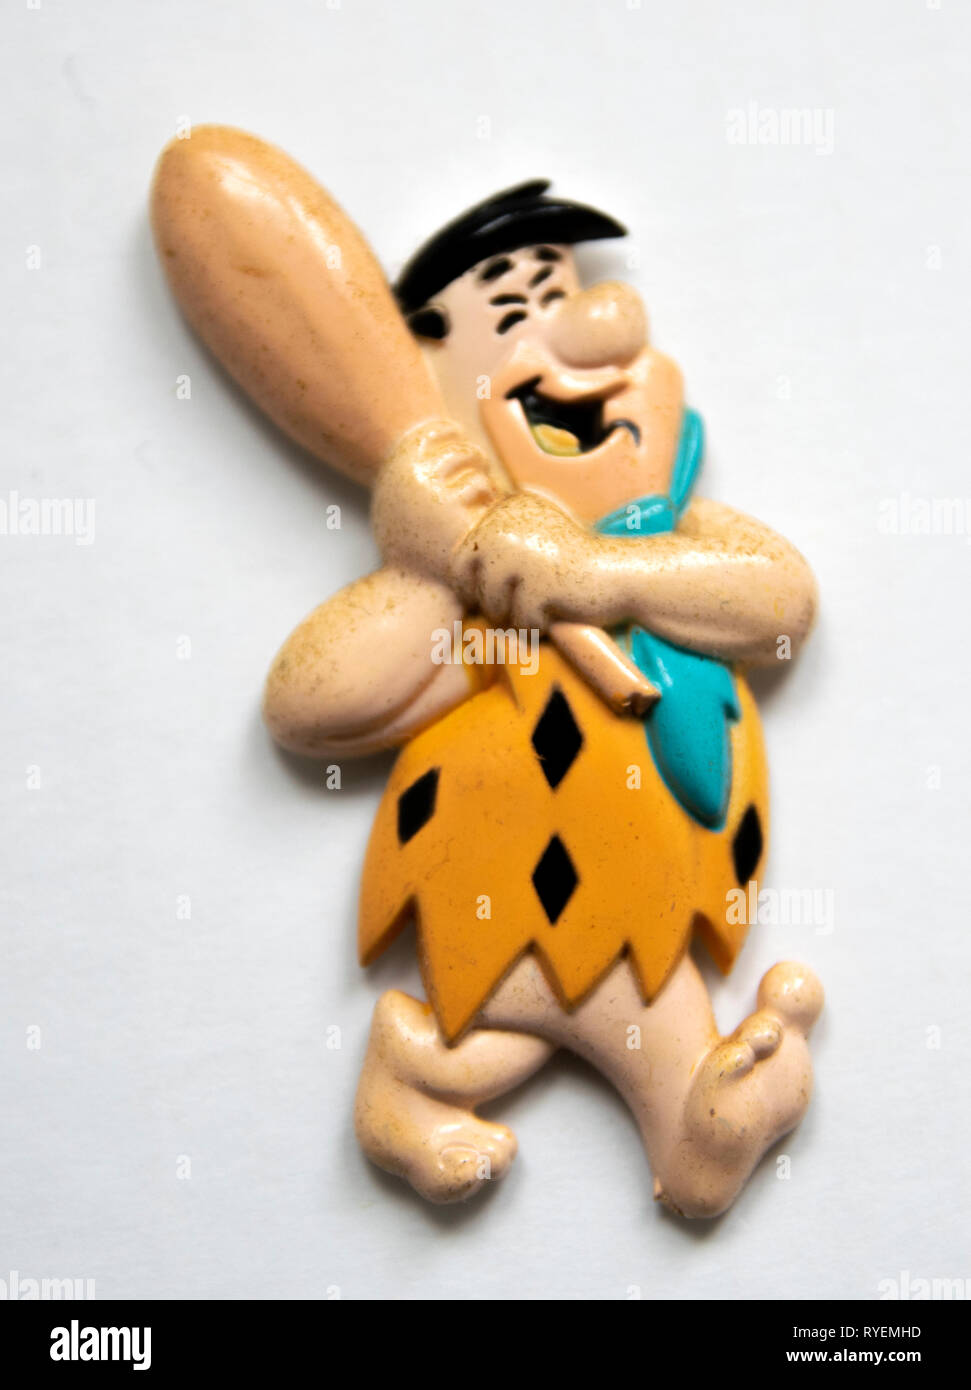 Fred Flintstone Figure At Amsterdam The Netherlands 2019 Stock Photo